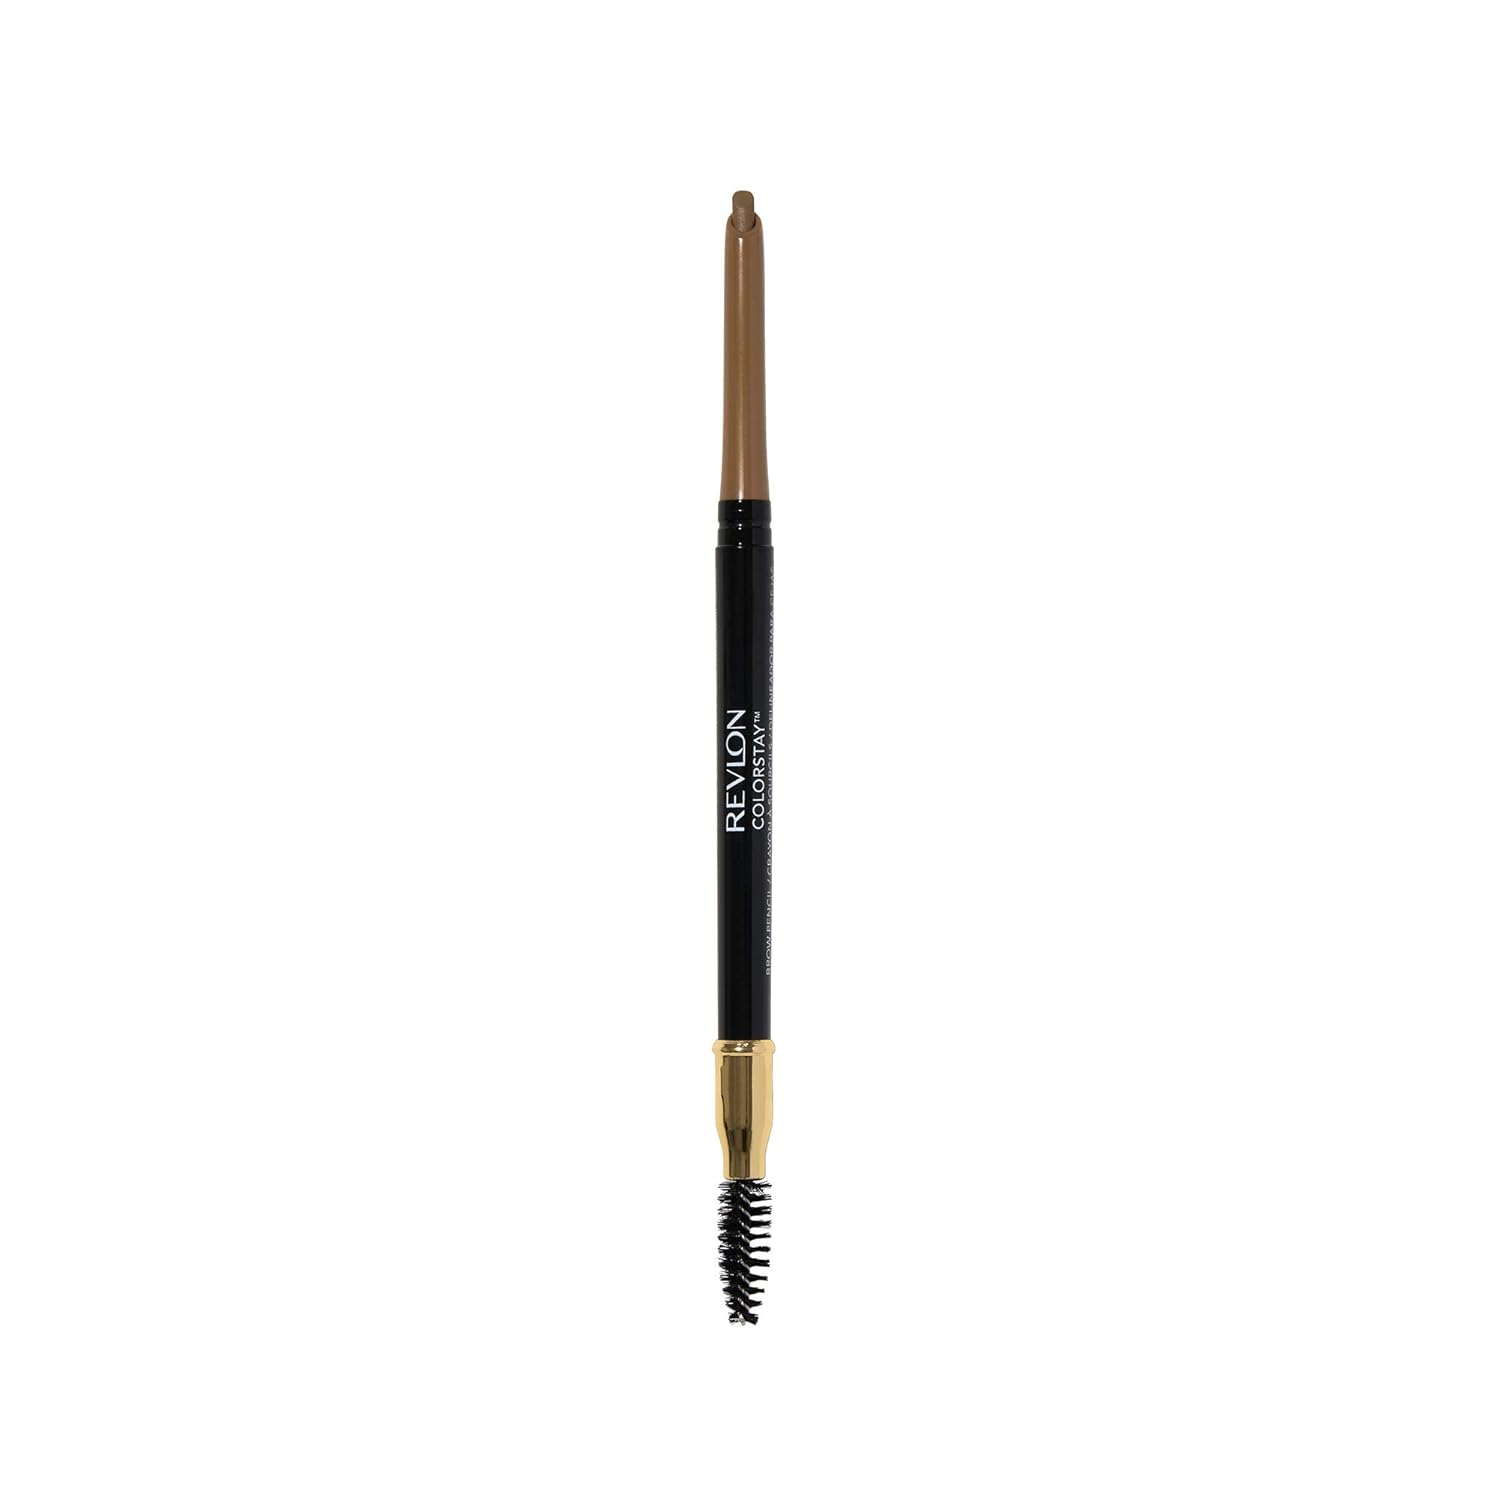 Revlon Eyebrow Pencil, Colorstay Eye Makeup with Eyebrow Spoolie, Waterproof, Longwearing Angled Precision Tip, 205 Blonde, 0.01